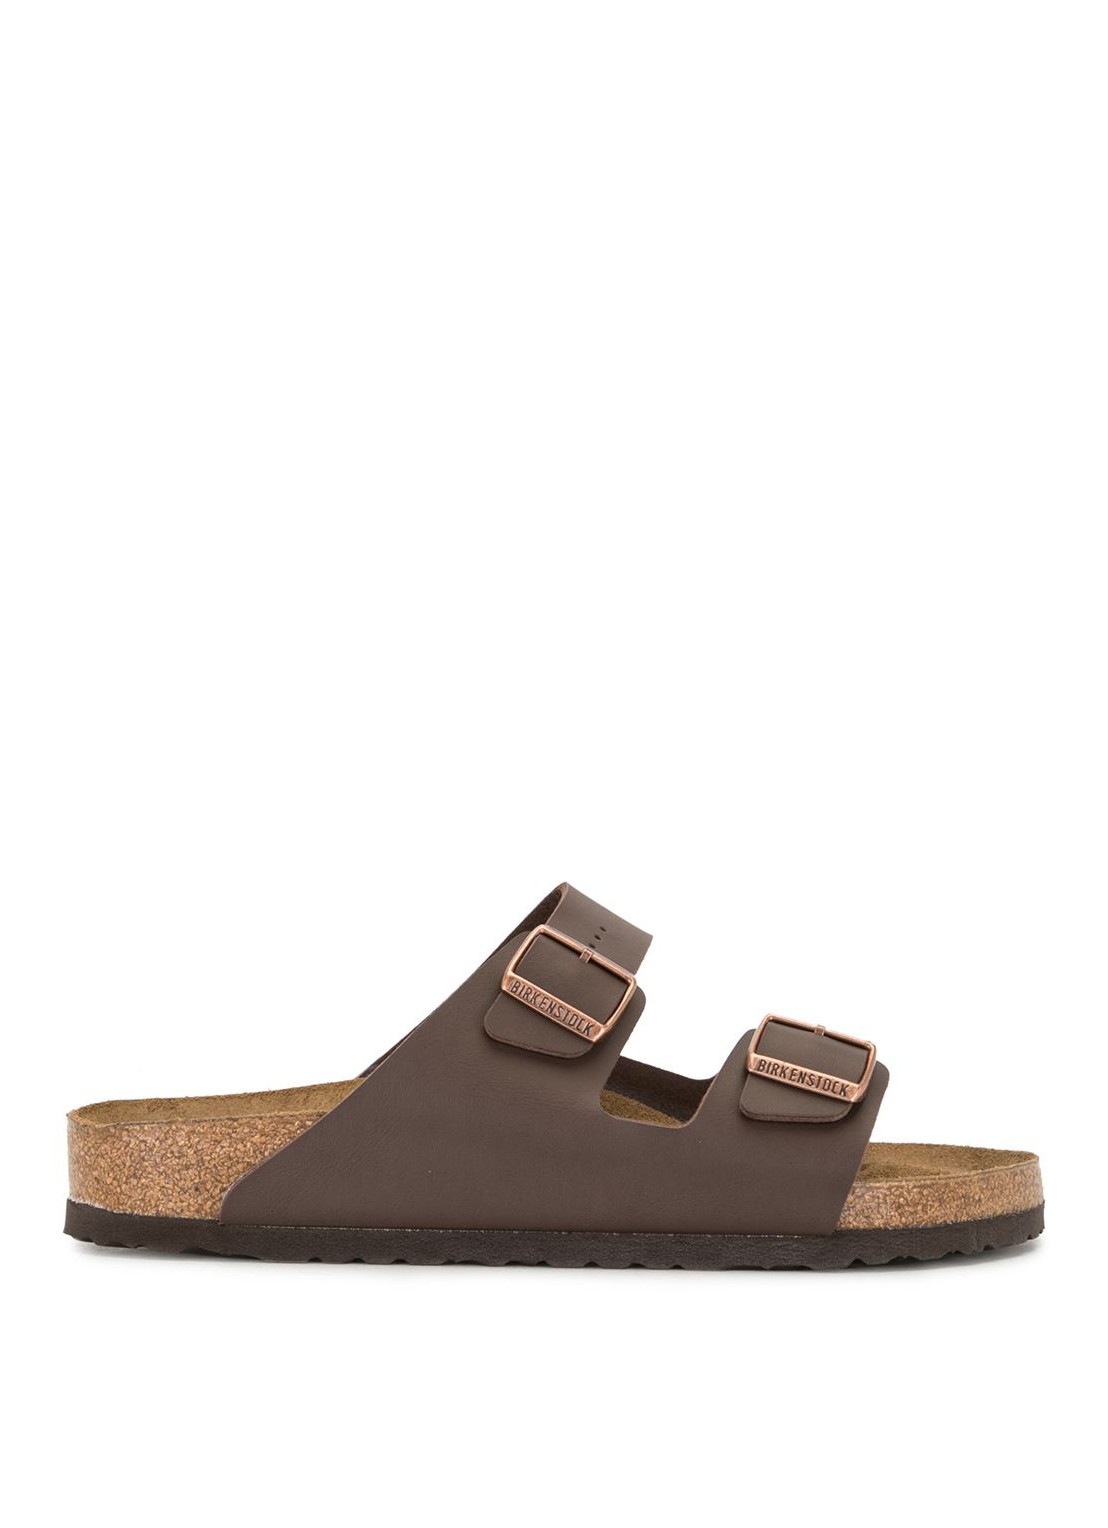 Sandalia birkenstock sandal man arizona 51701 dark brown talla 44
 